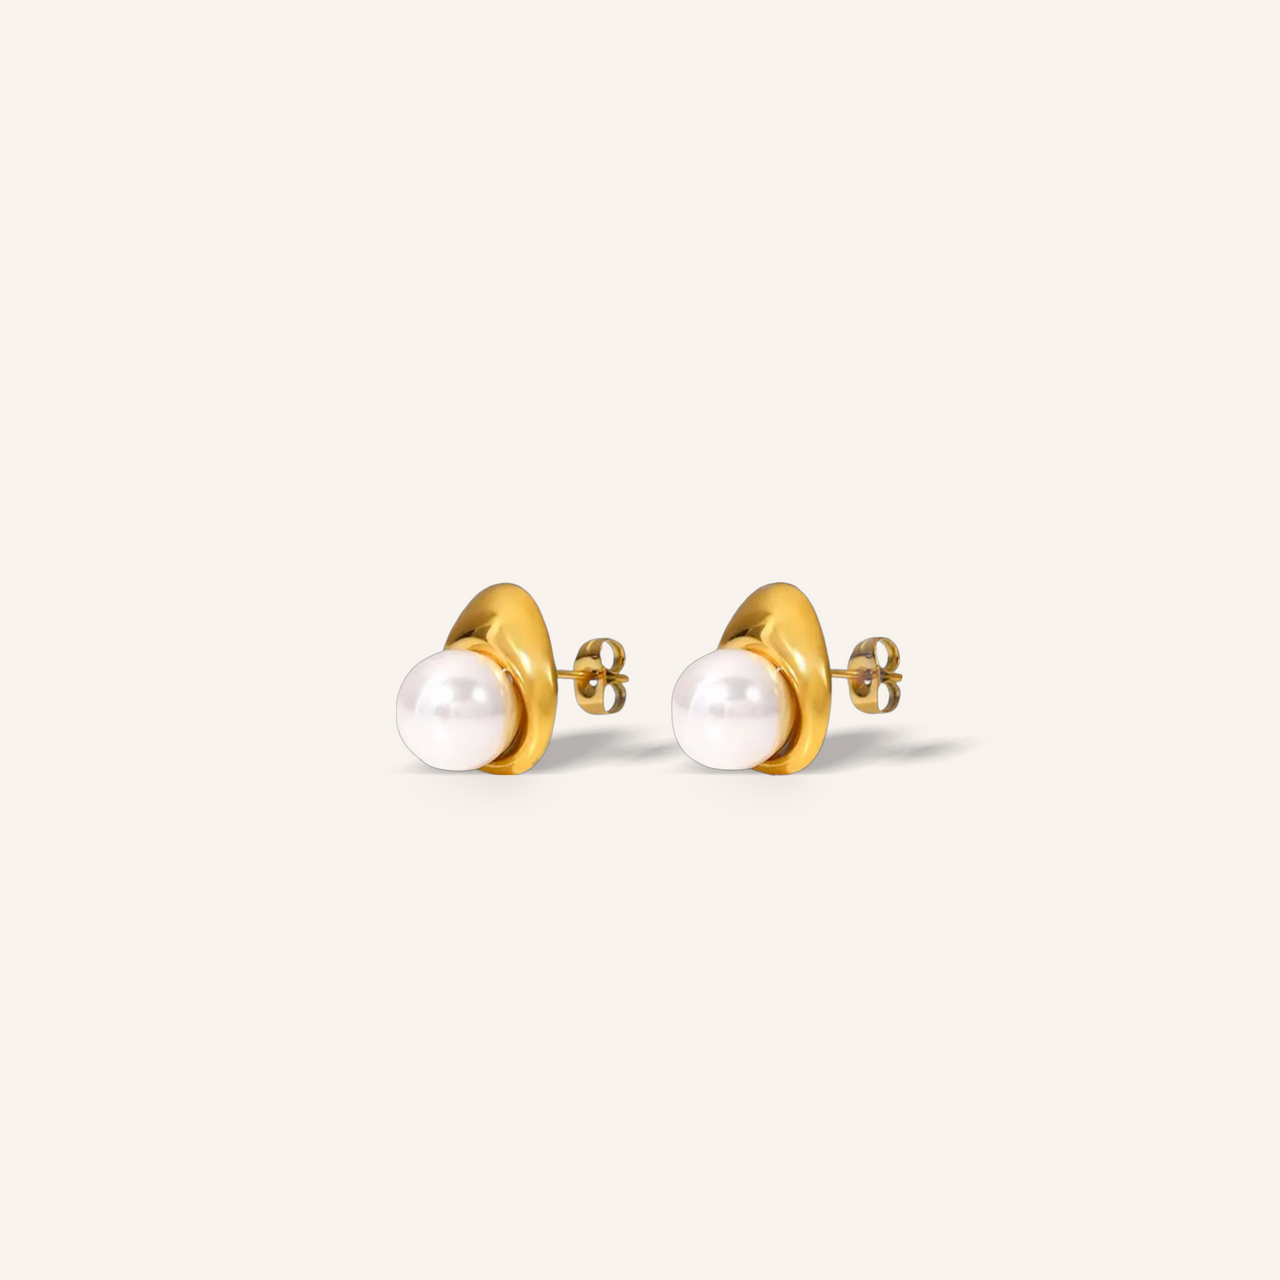 Ember earrings